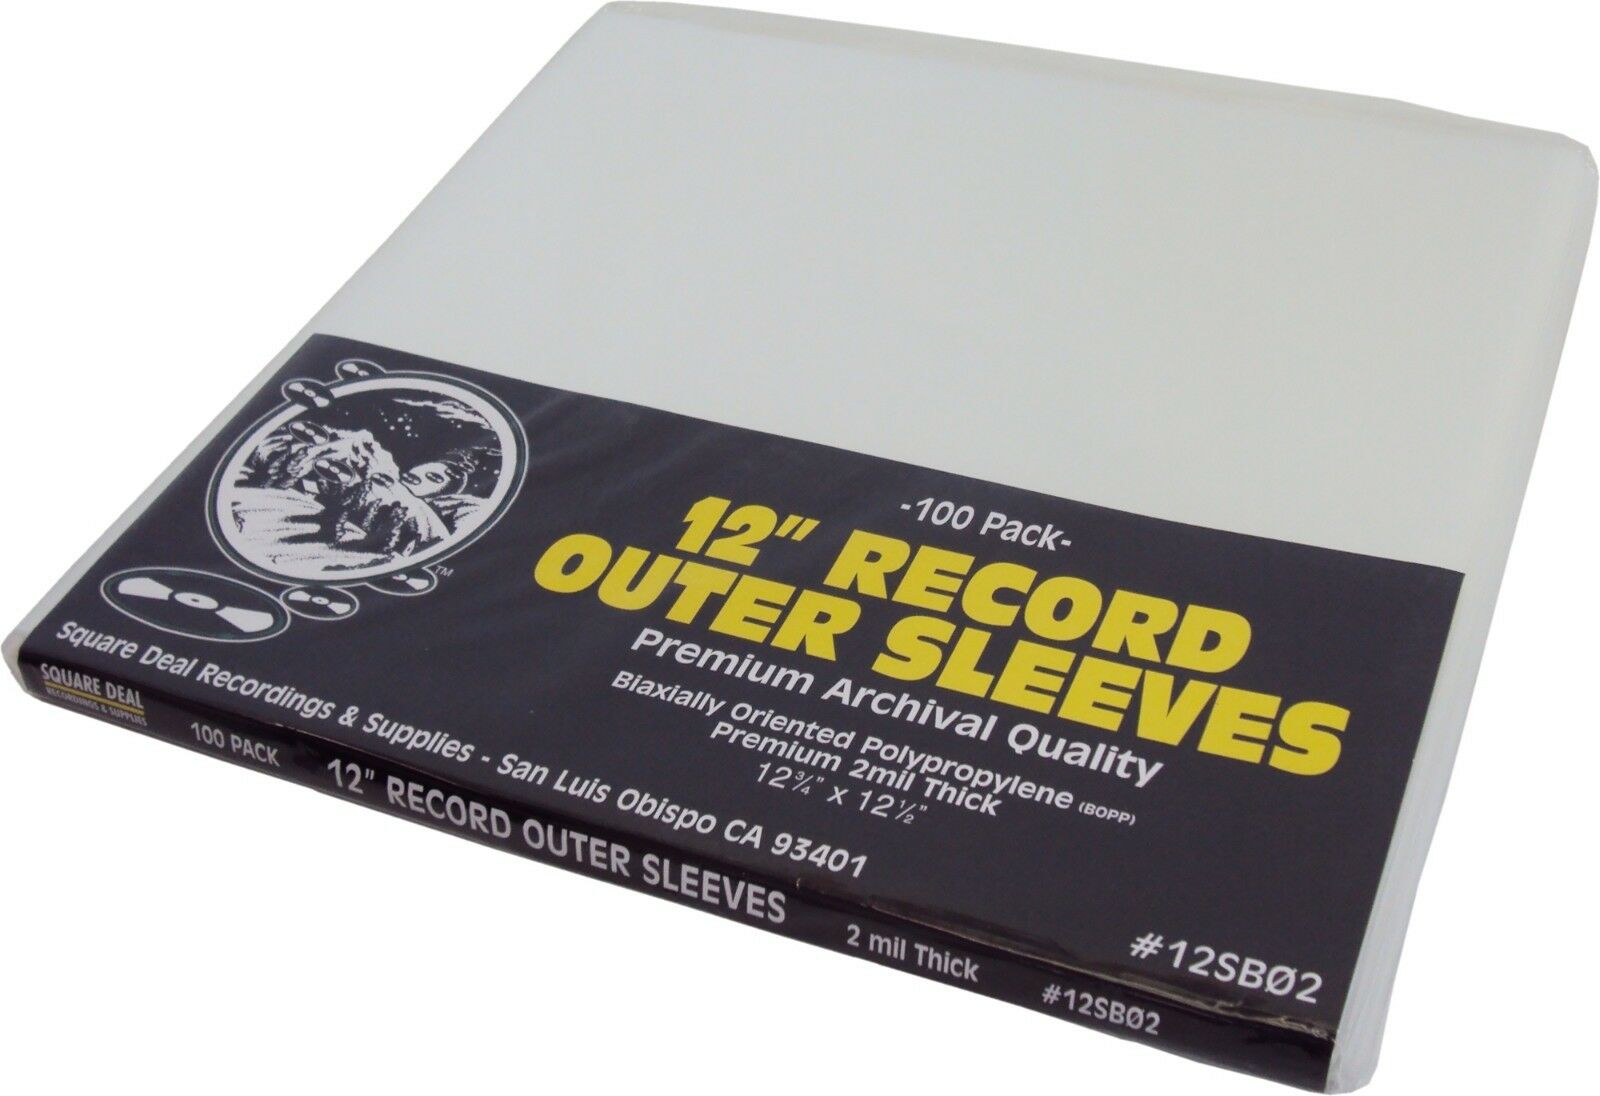 (100) 12" Super Clear 2mil Record Outer Sleeves Vinyl Bags Bopp Flush Cut 12sb02